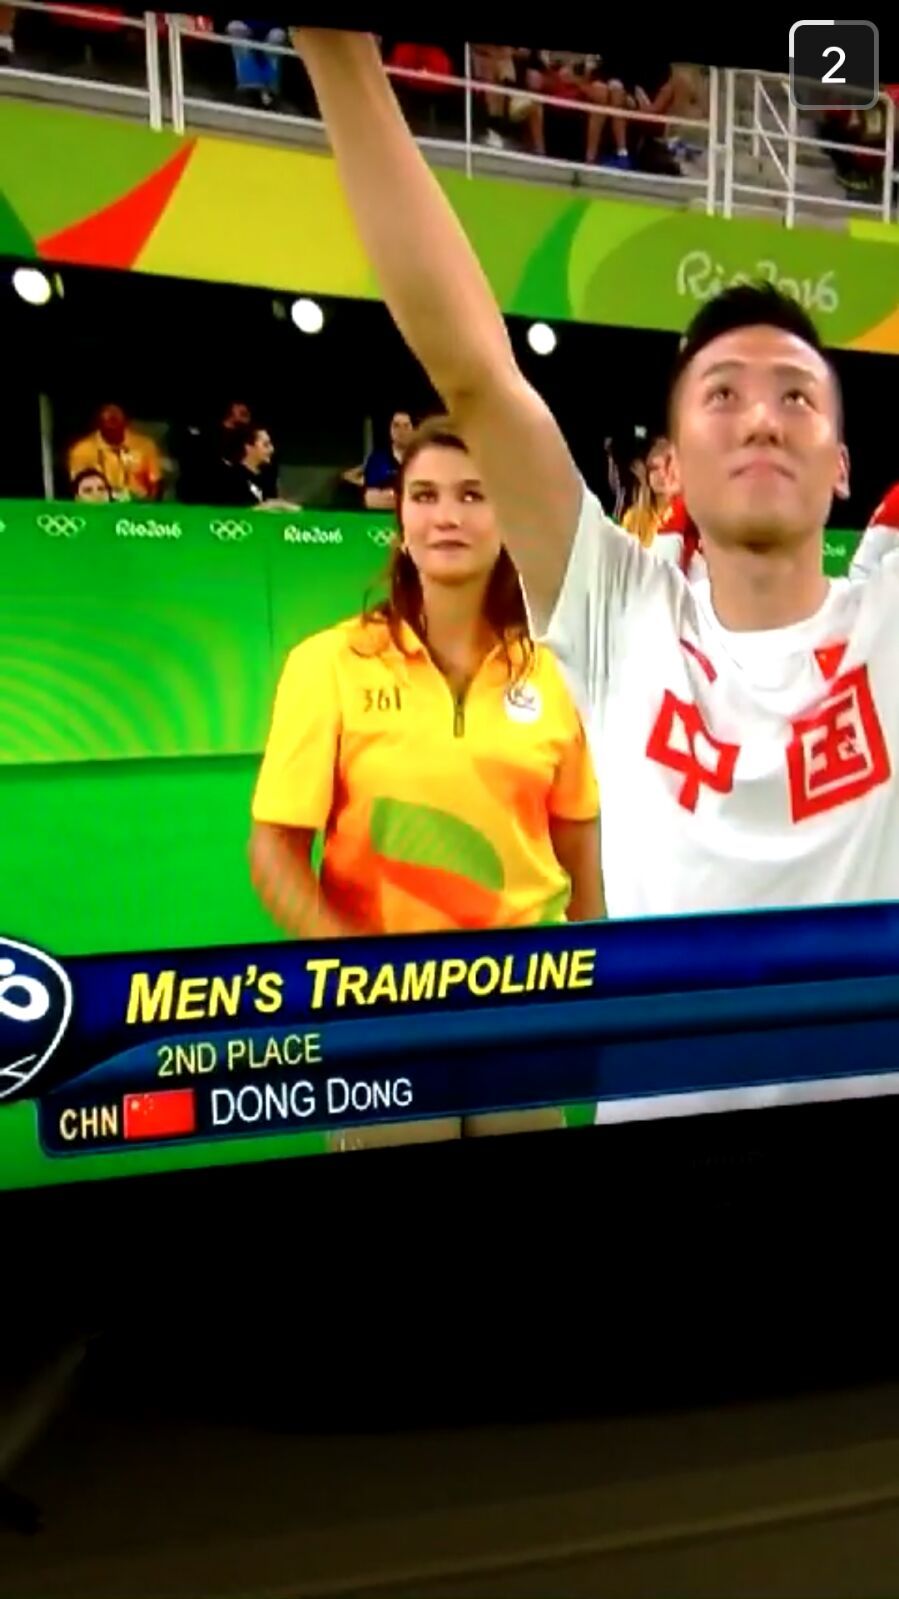 That name tho, tramampoline mastur. - meme